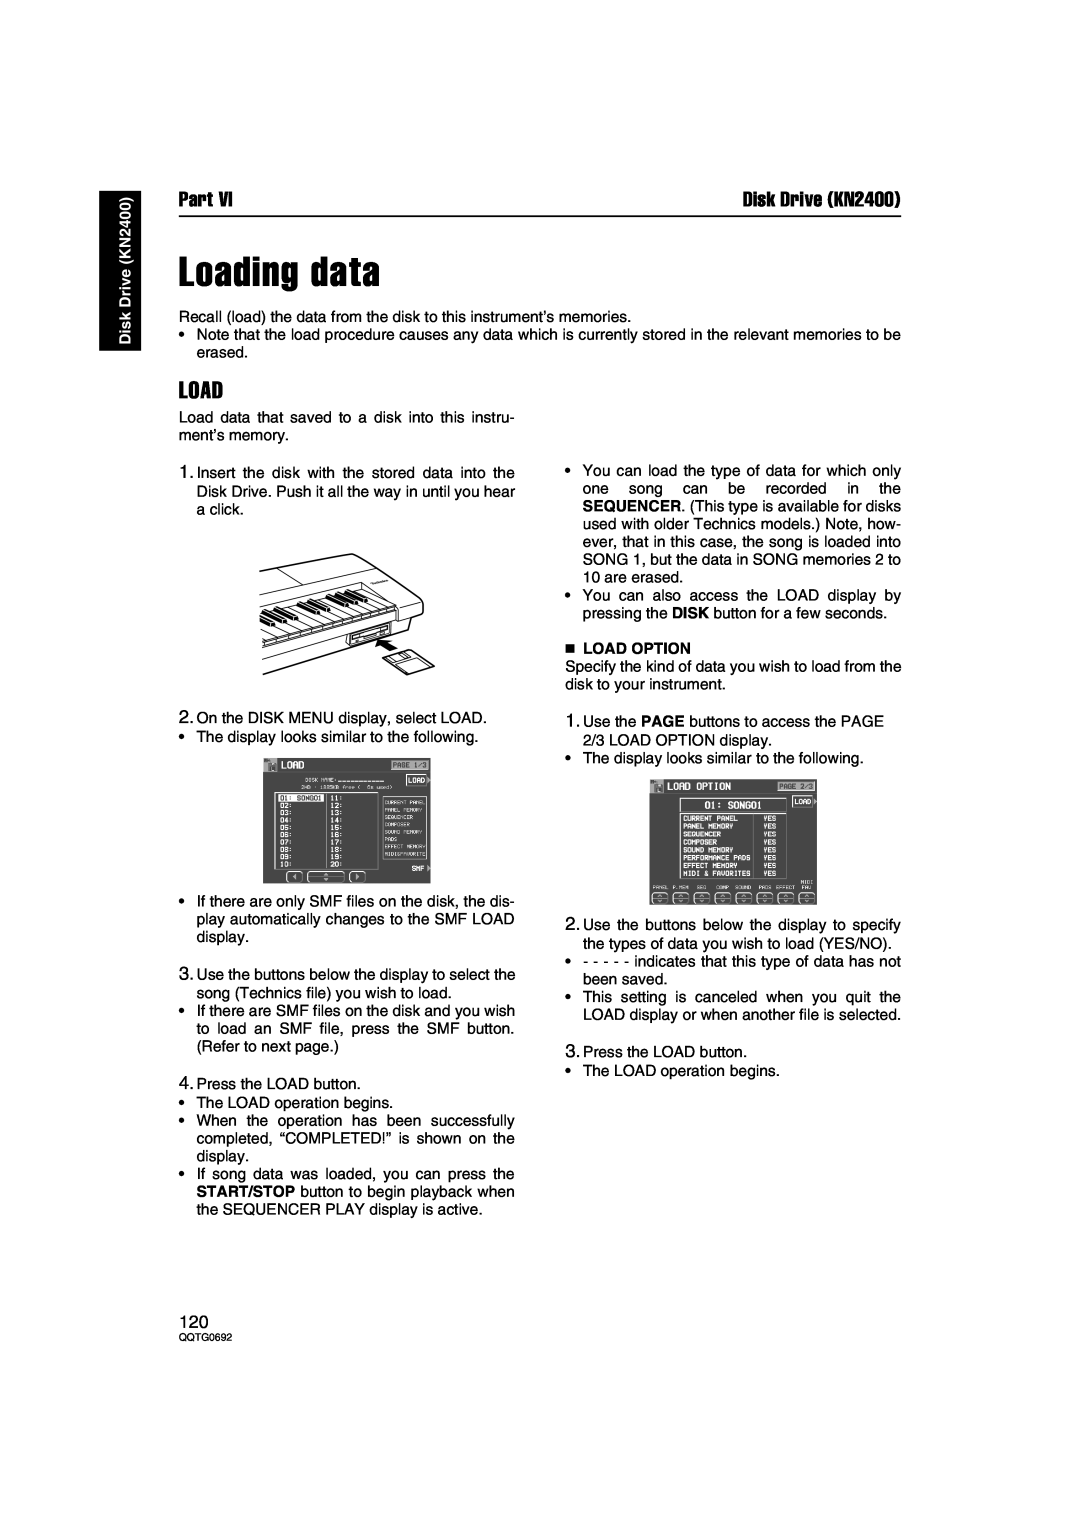 Panasonic SX-KN2600, SX-KN2400 manual Loading data, Load Option, Part, Disk Drive KN2400 